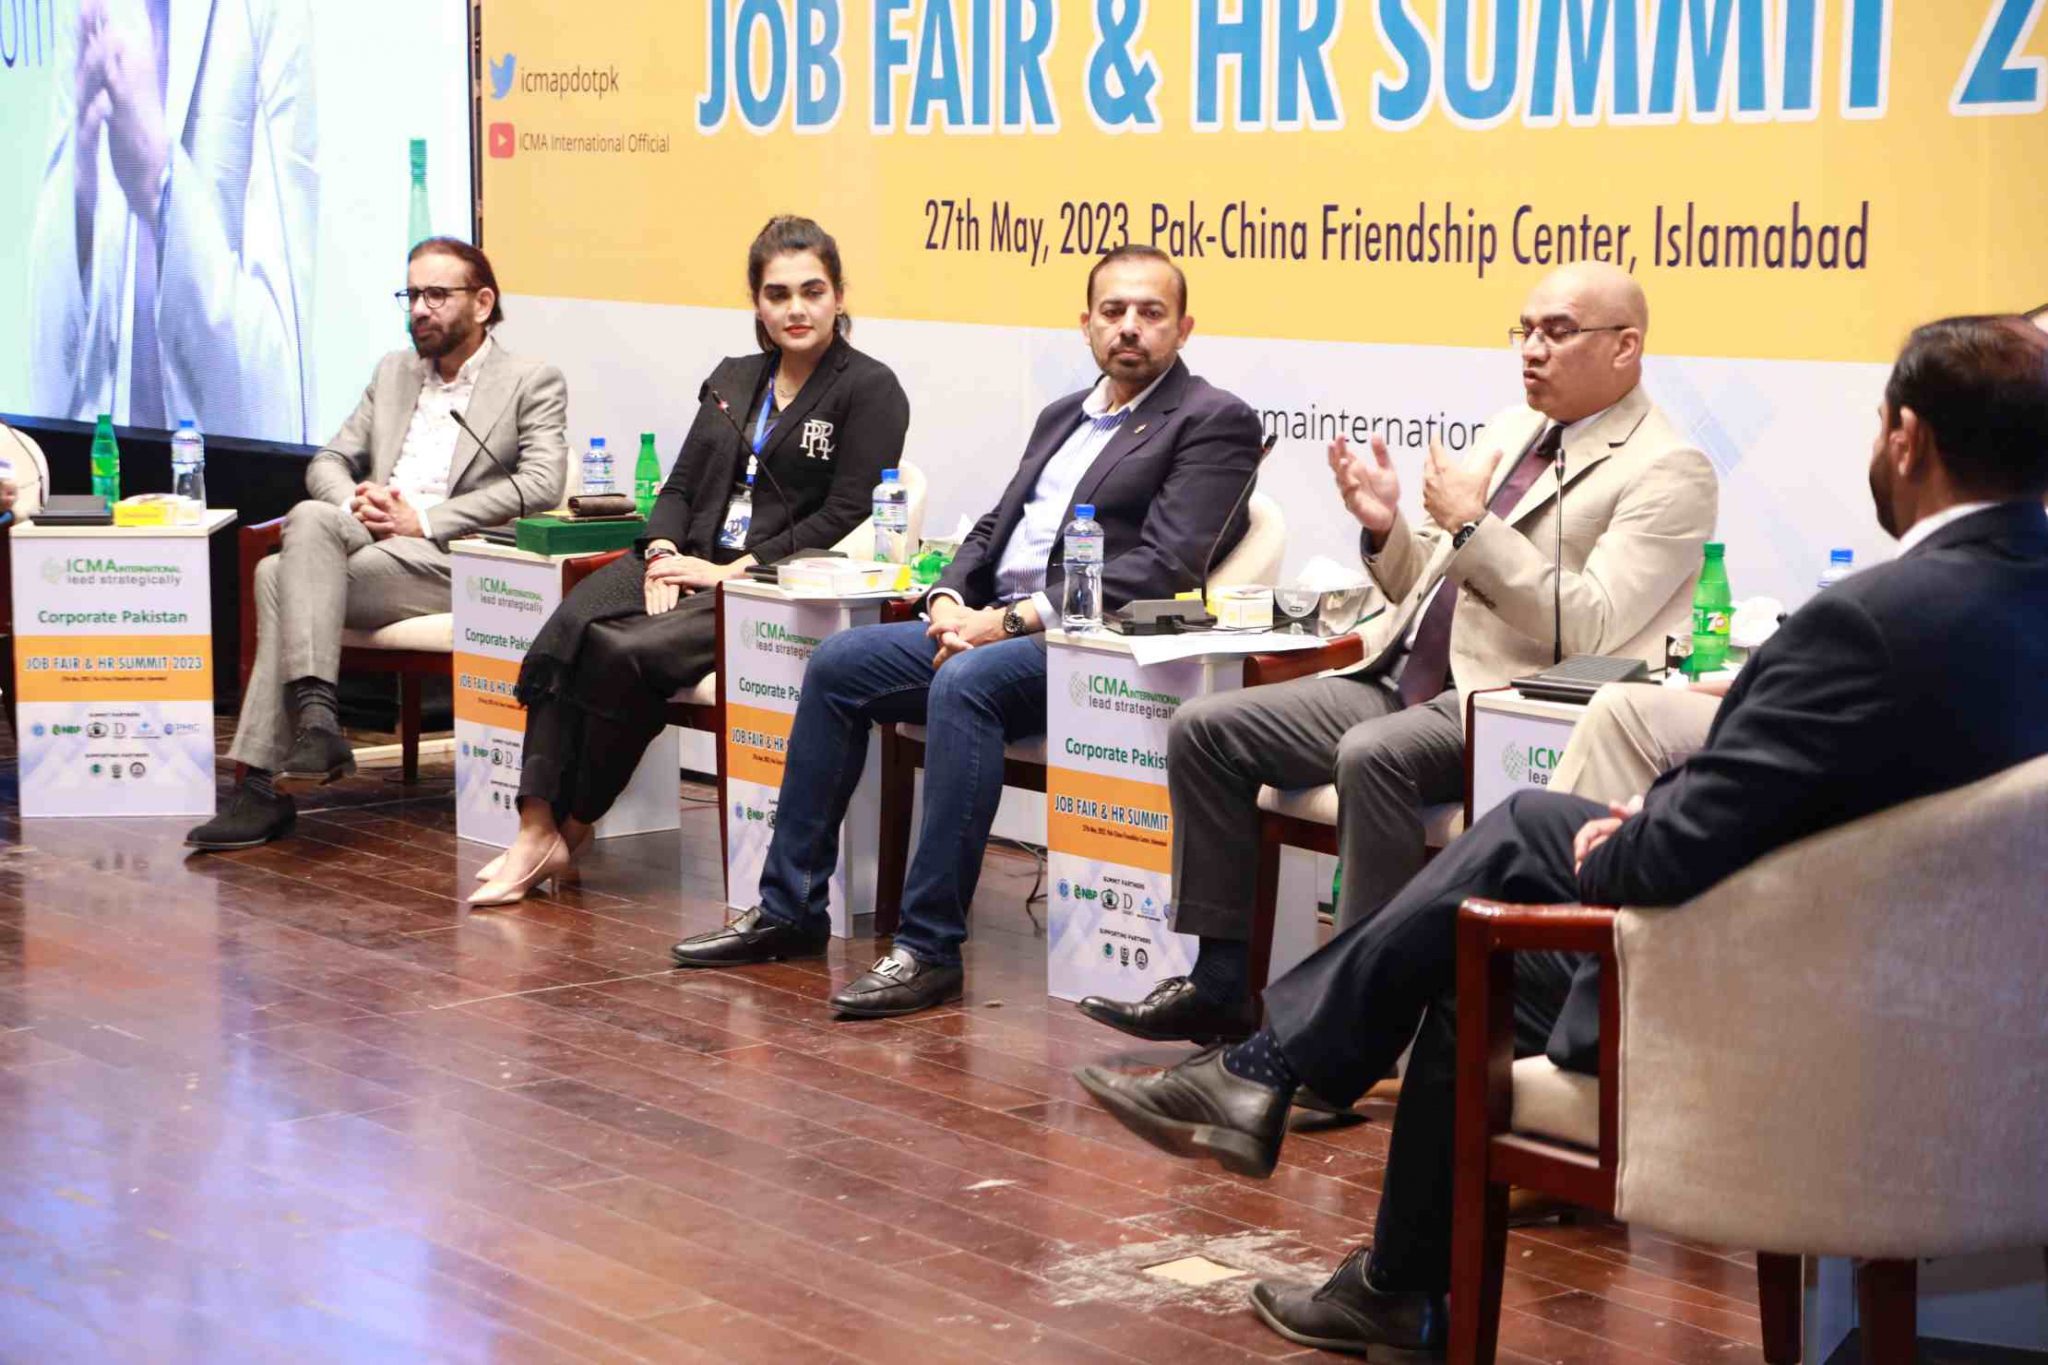 HR Summit & Job Fair 2023 Exhibition - Image 3 - CRI Group™